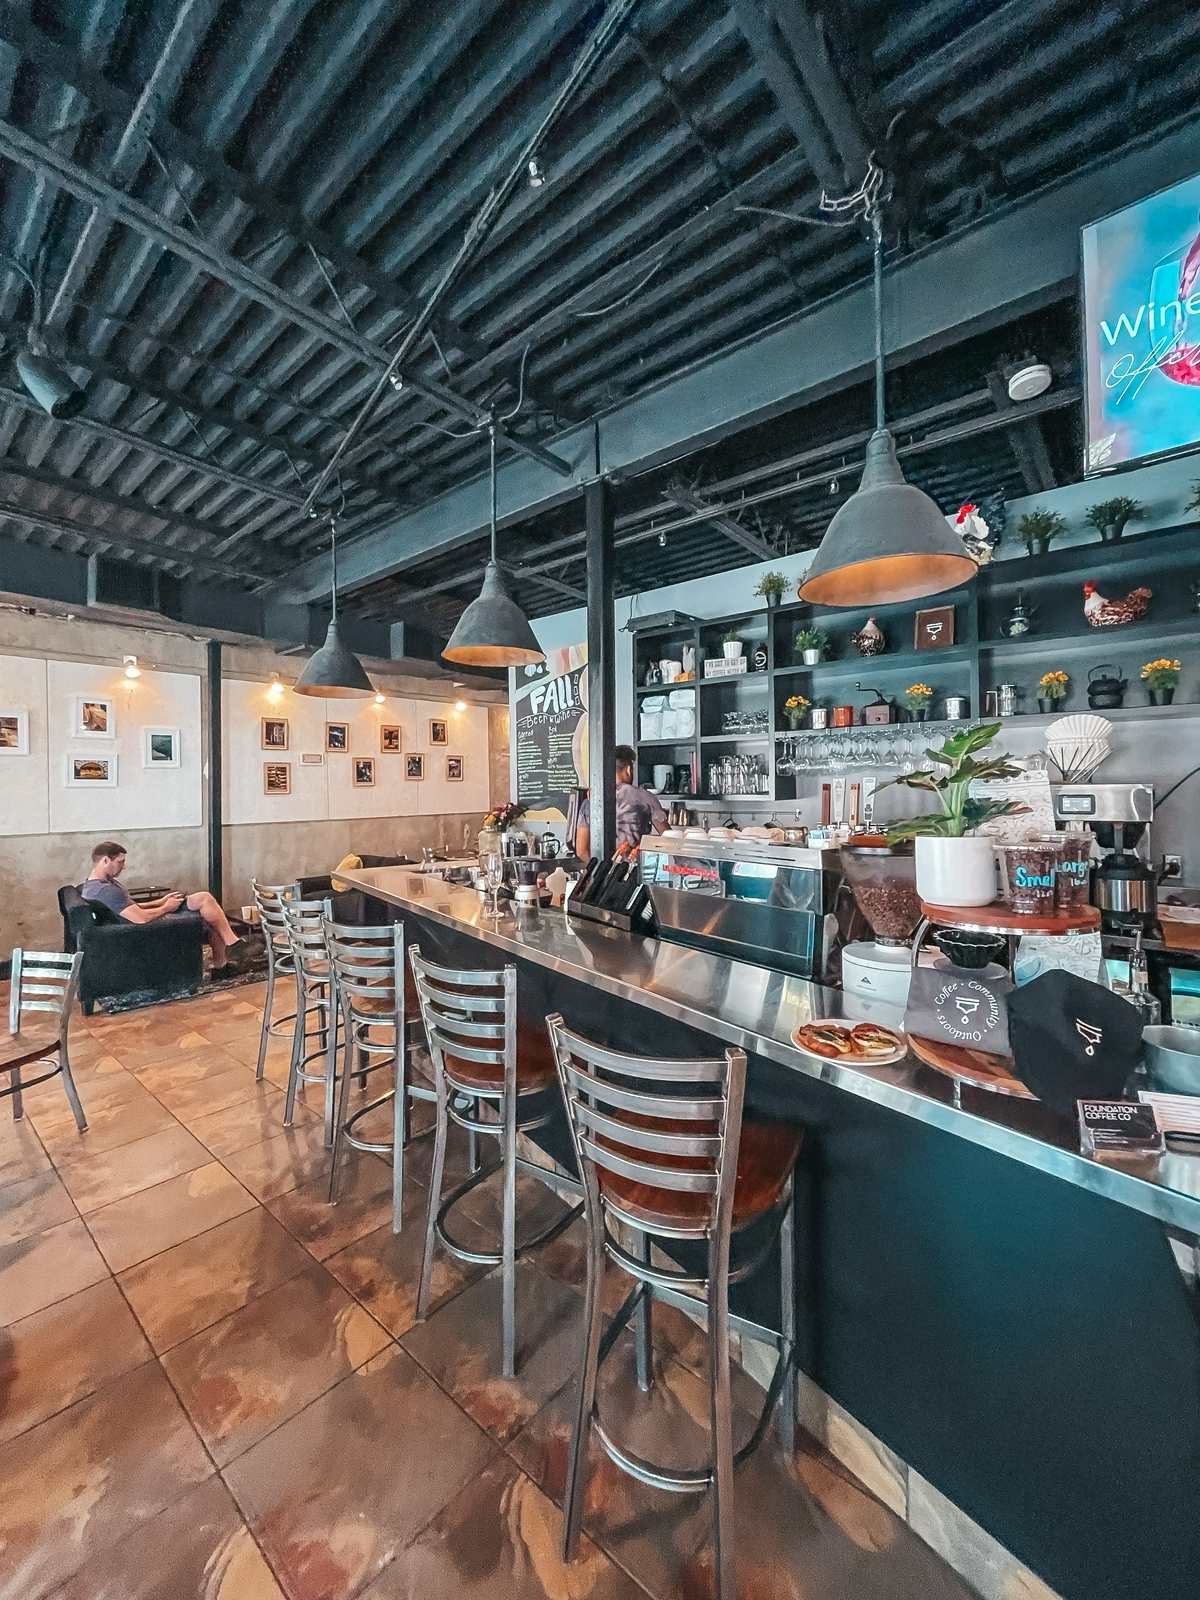 Foundation Coffee Shop in Ybor Tampa